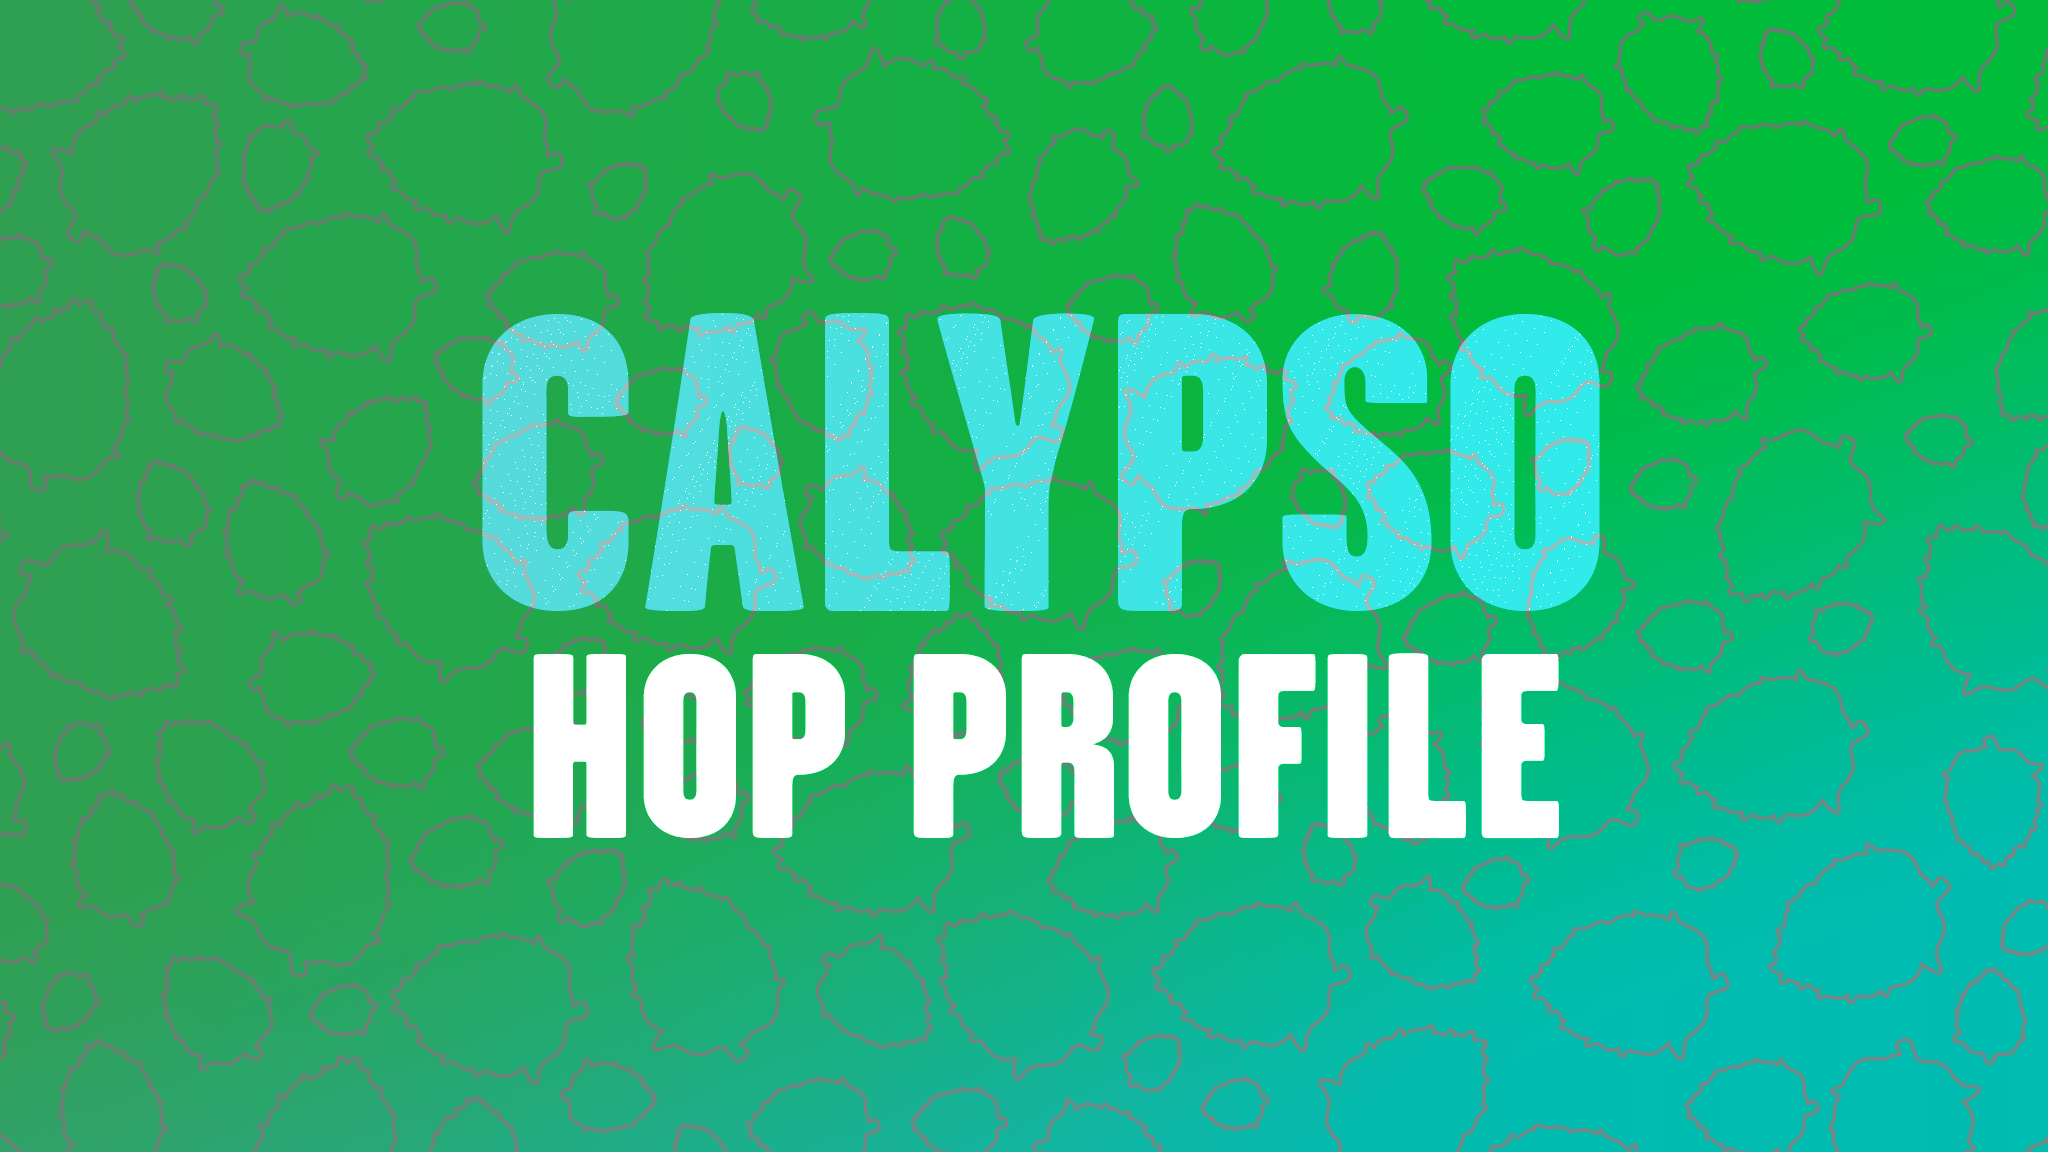 Hop Profile: Calypso